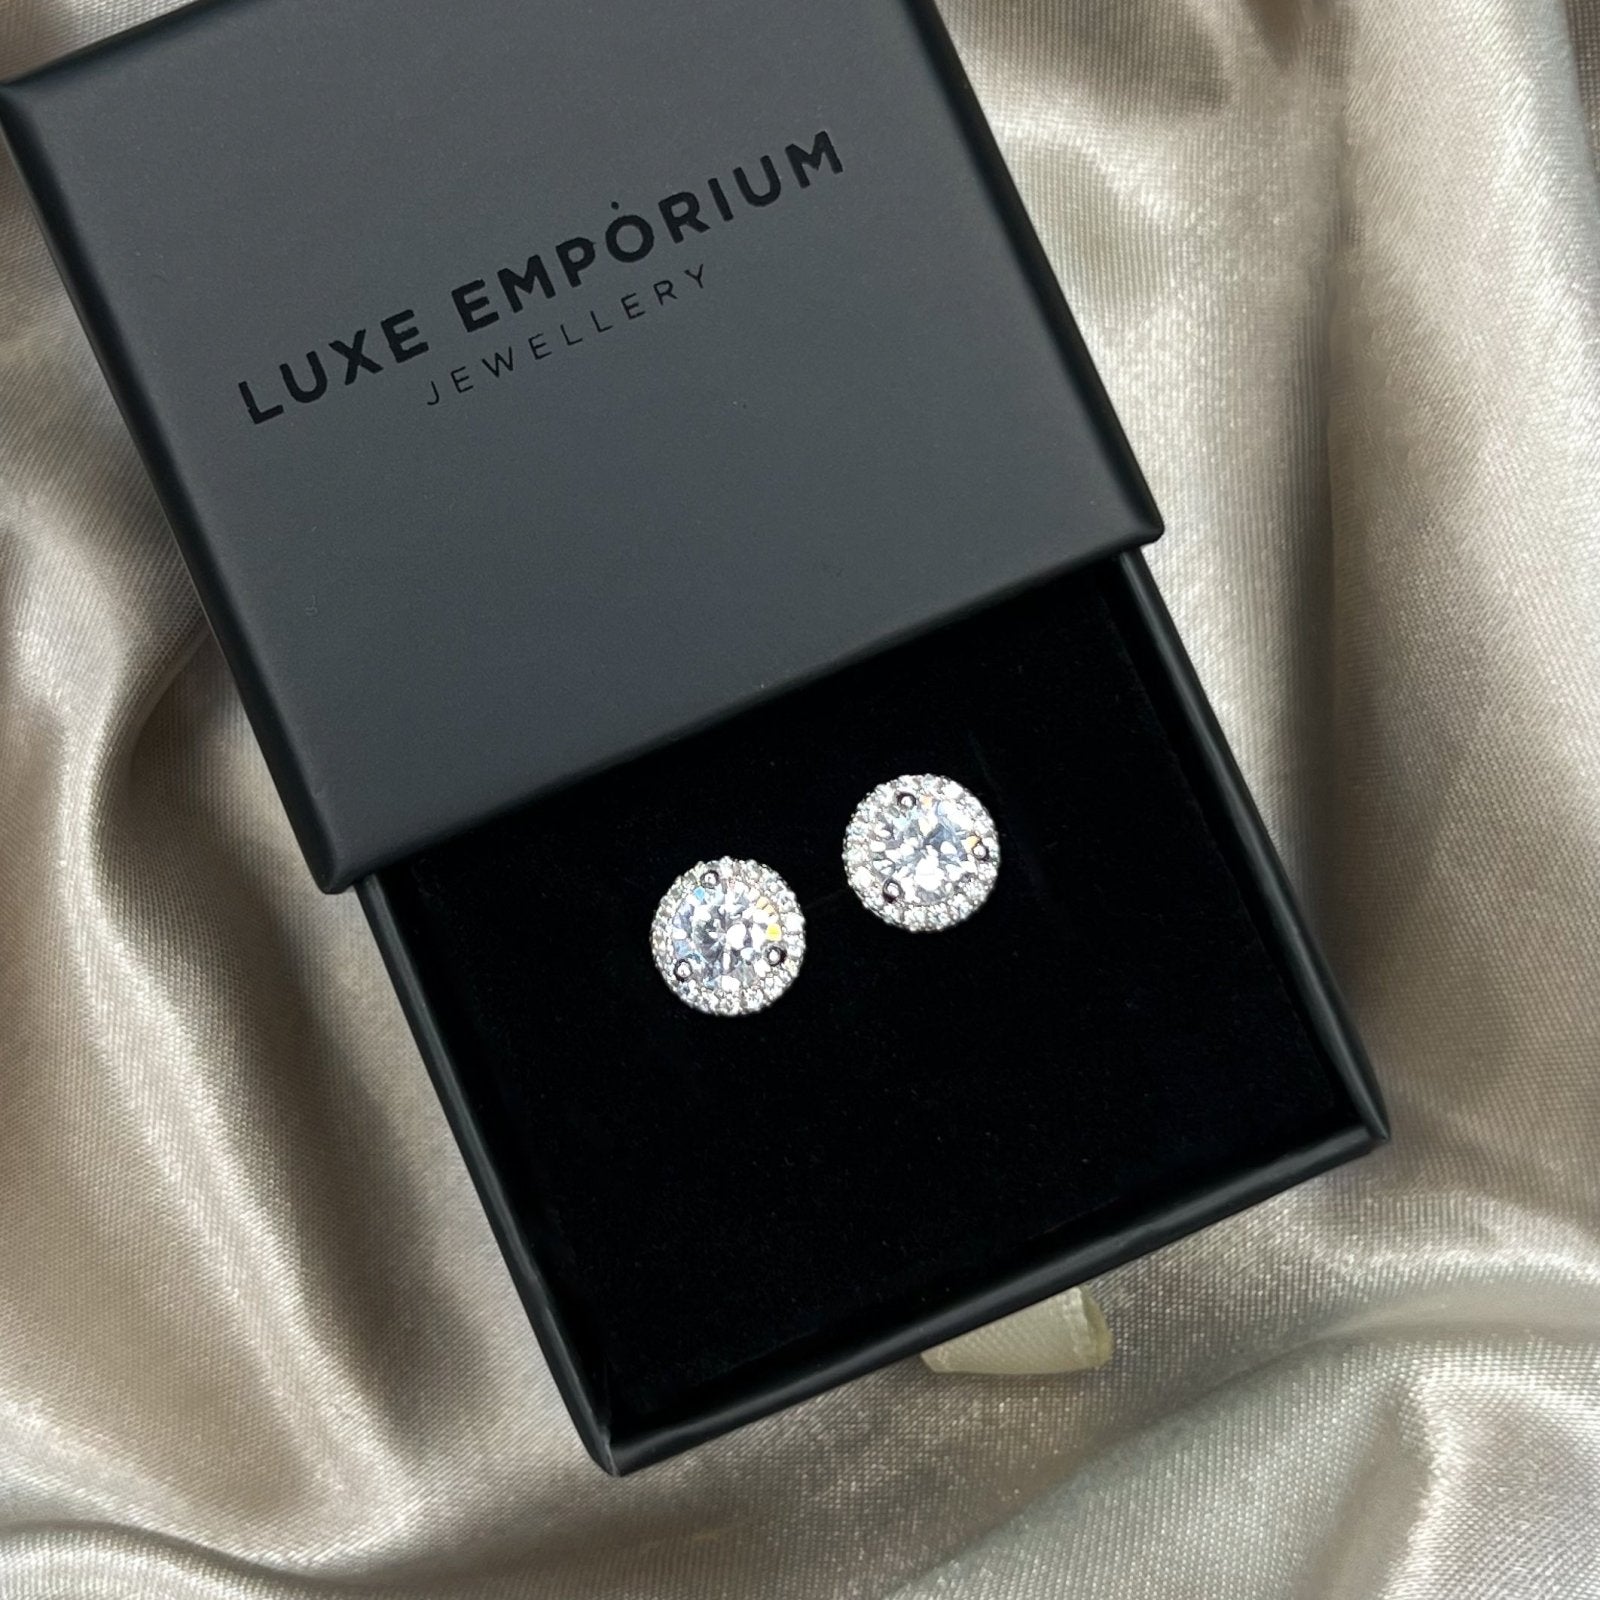 Earrings - Luxe Emporium x